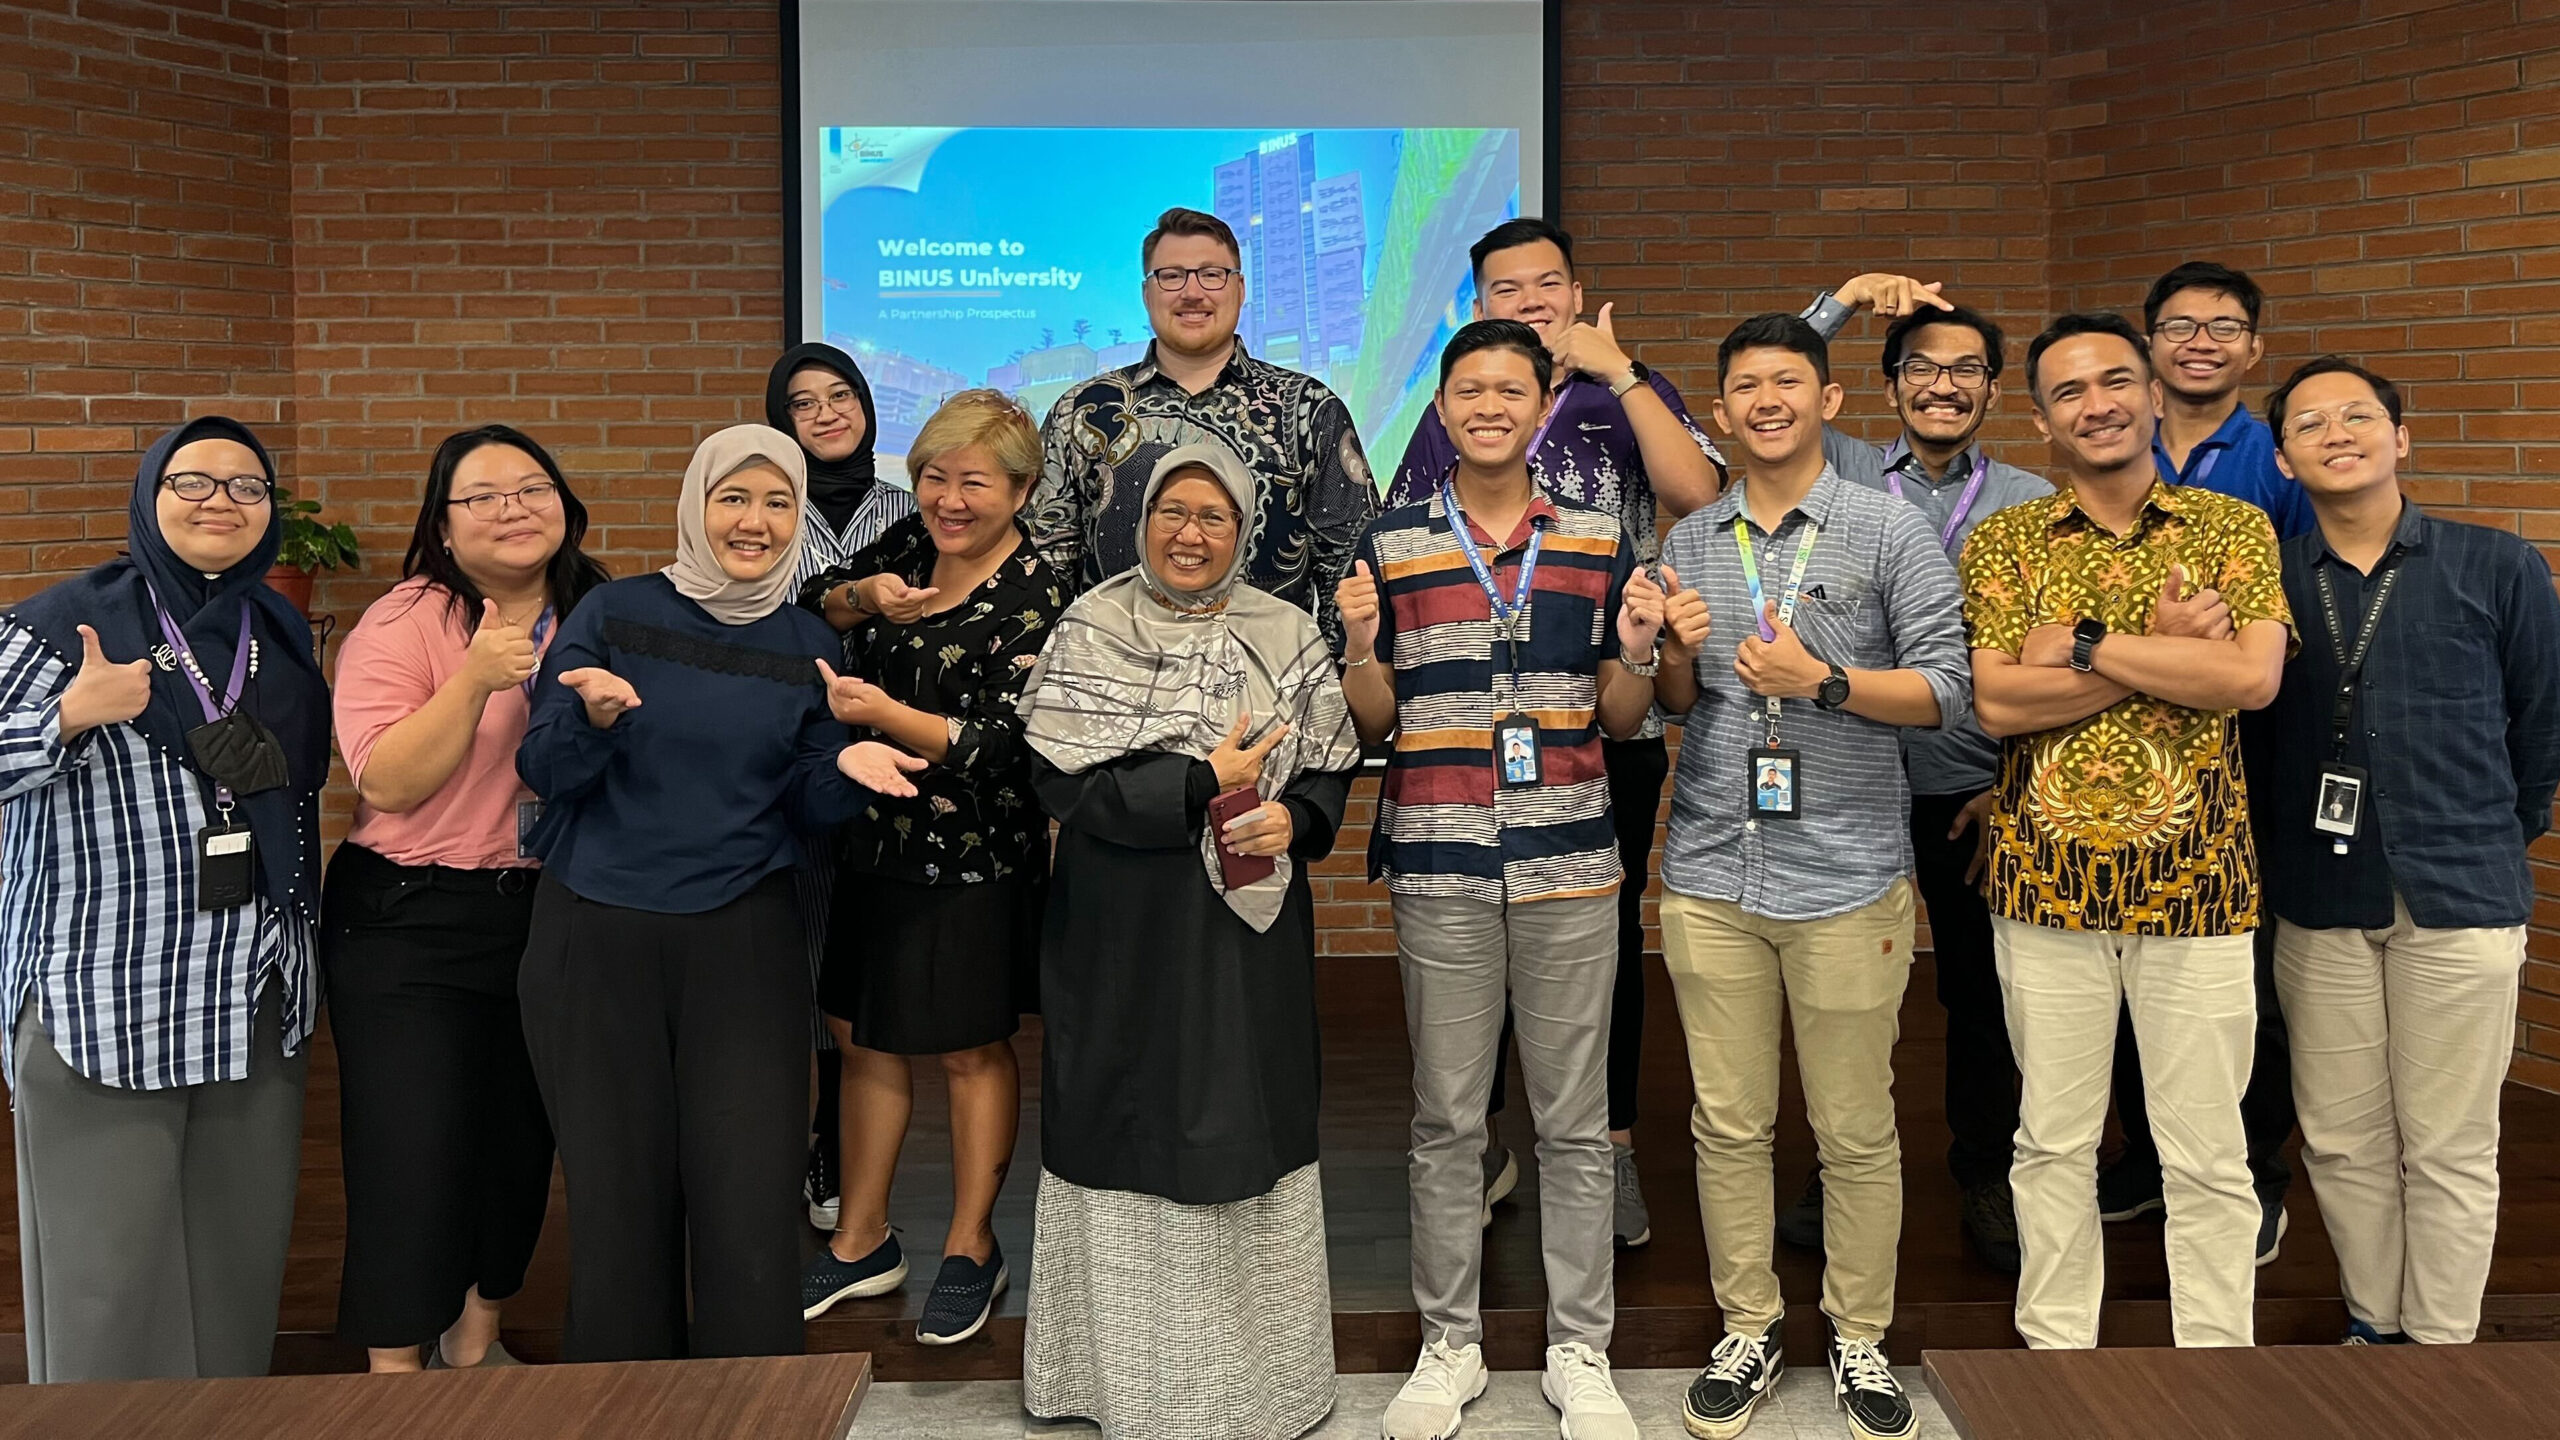 A group photo of ASU’s Jared Schoepf with representatives from Bina Nusantara University in Indonesia.